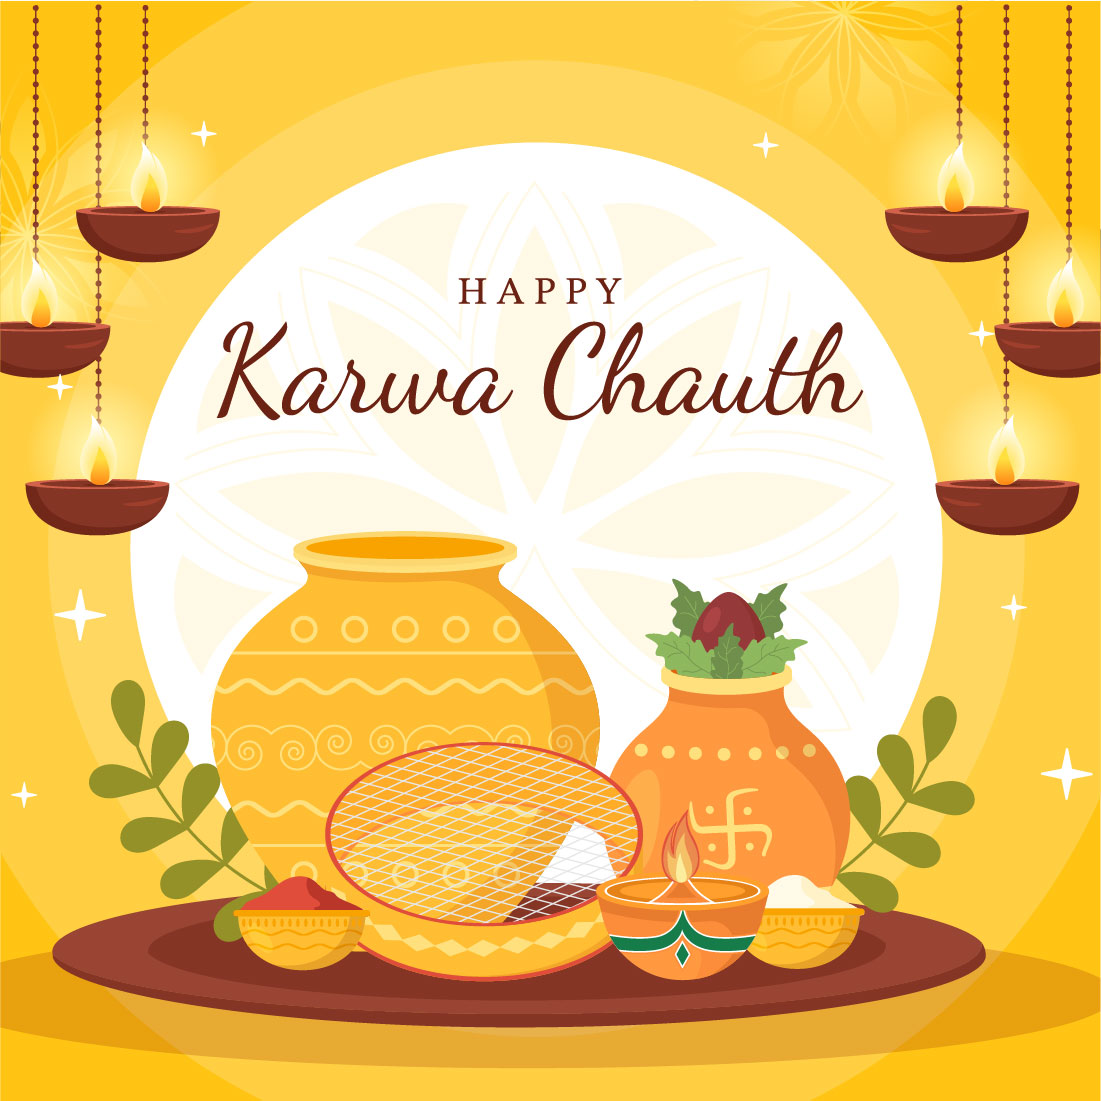 13 Karwa Chauth Festival Illustration Preview Image.